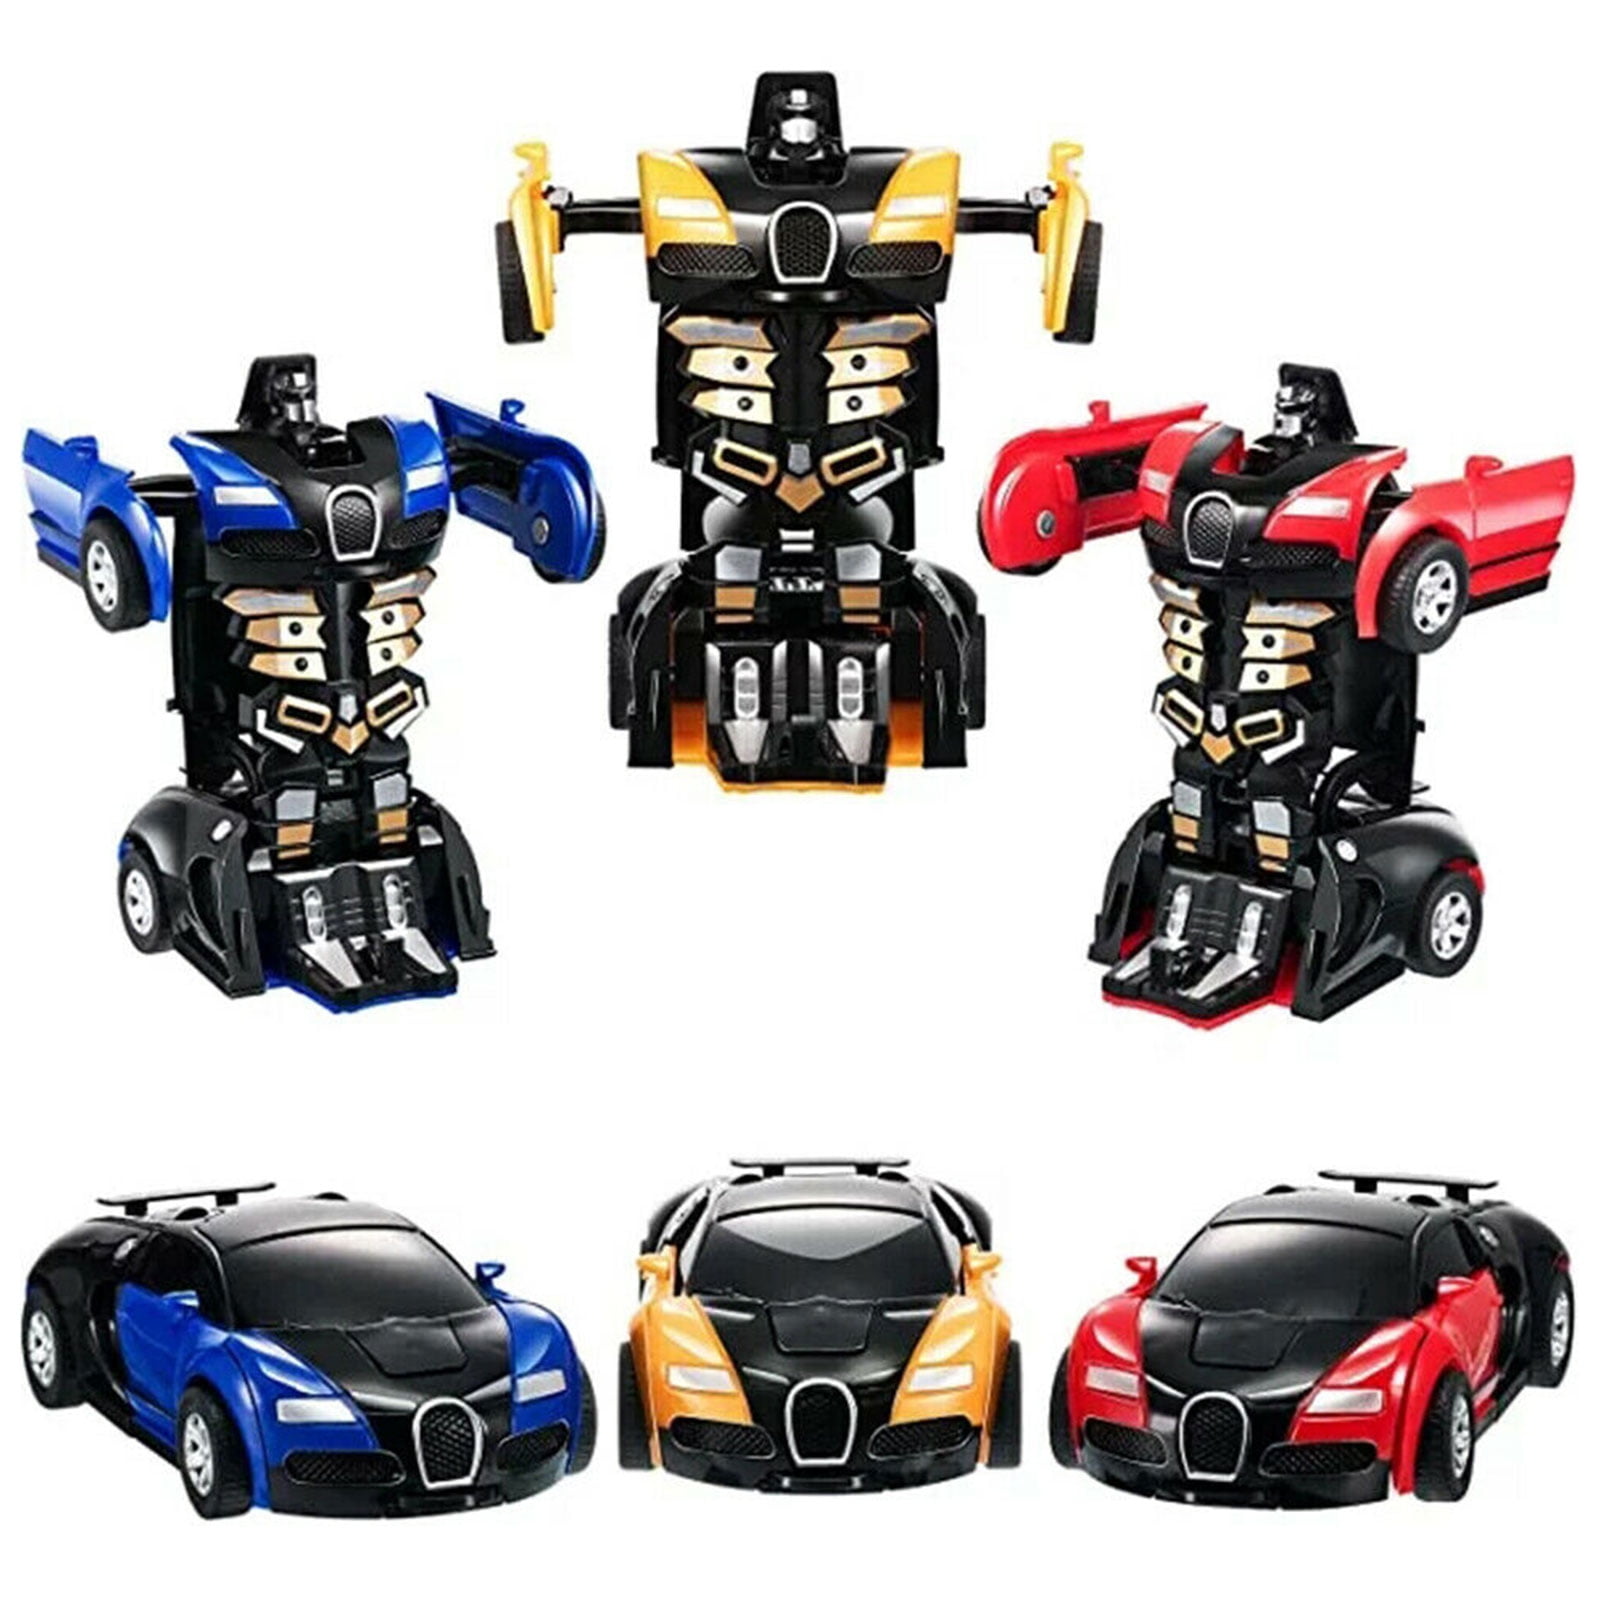 winwintom Robot Car Body Deformation Robot A-utobot Boy Child Model Toy Birthday for Children Blue 